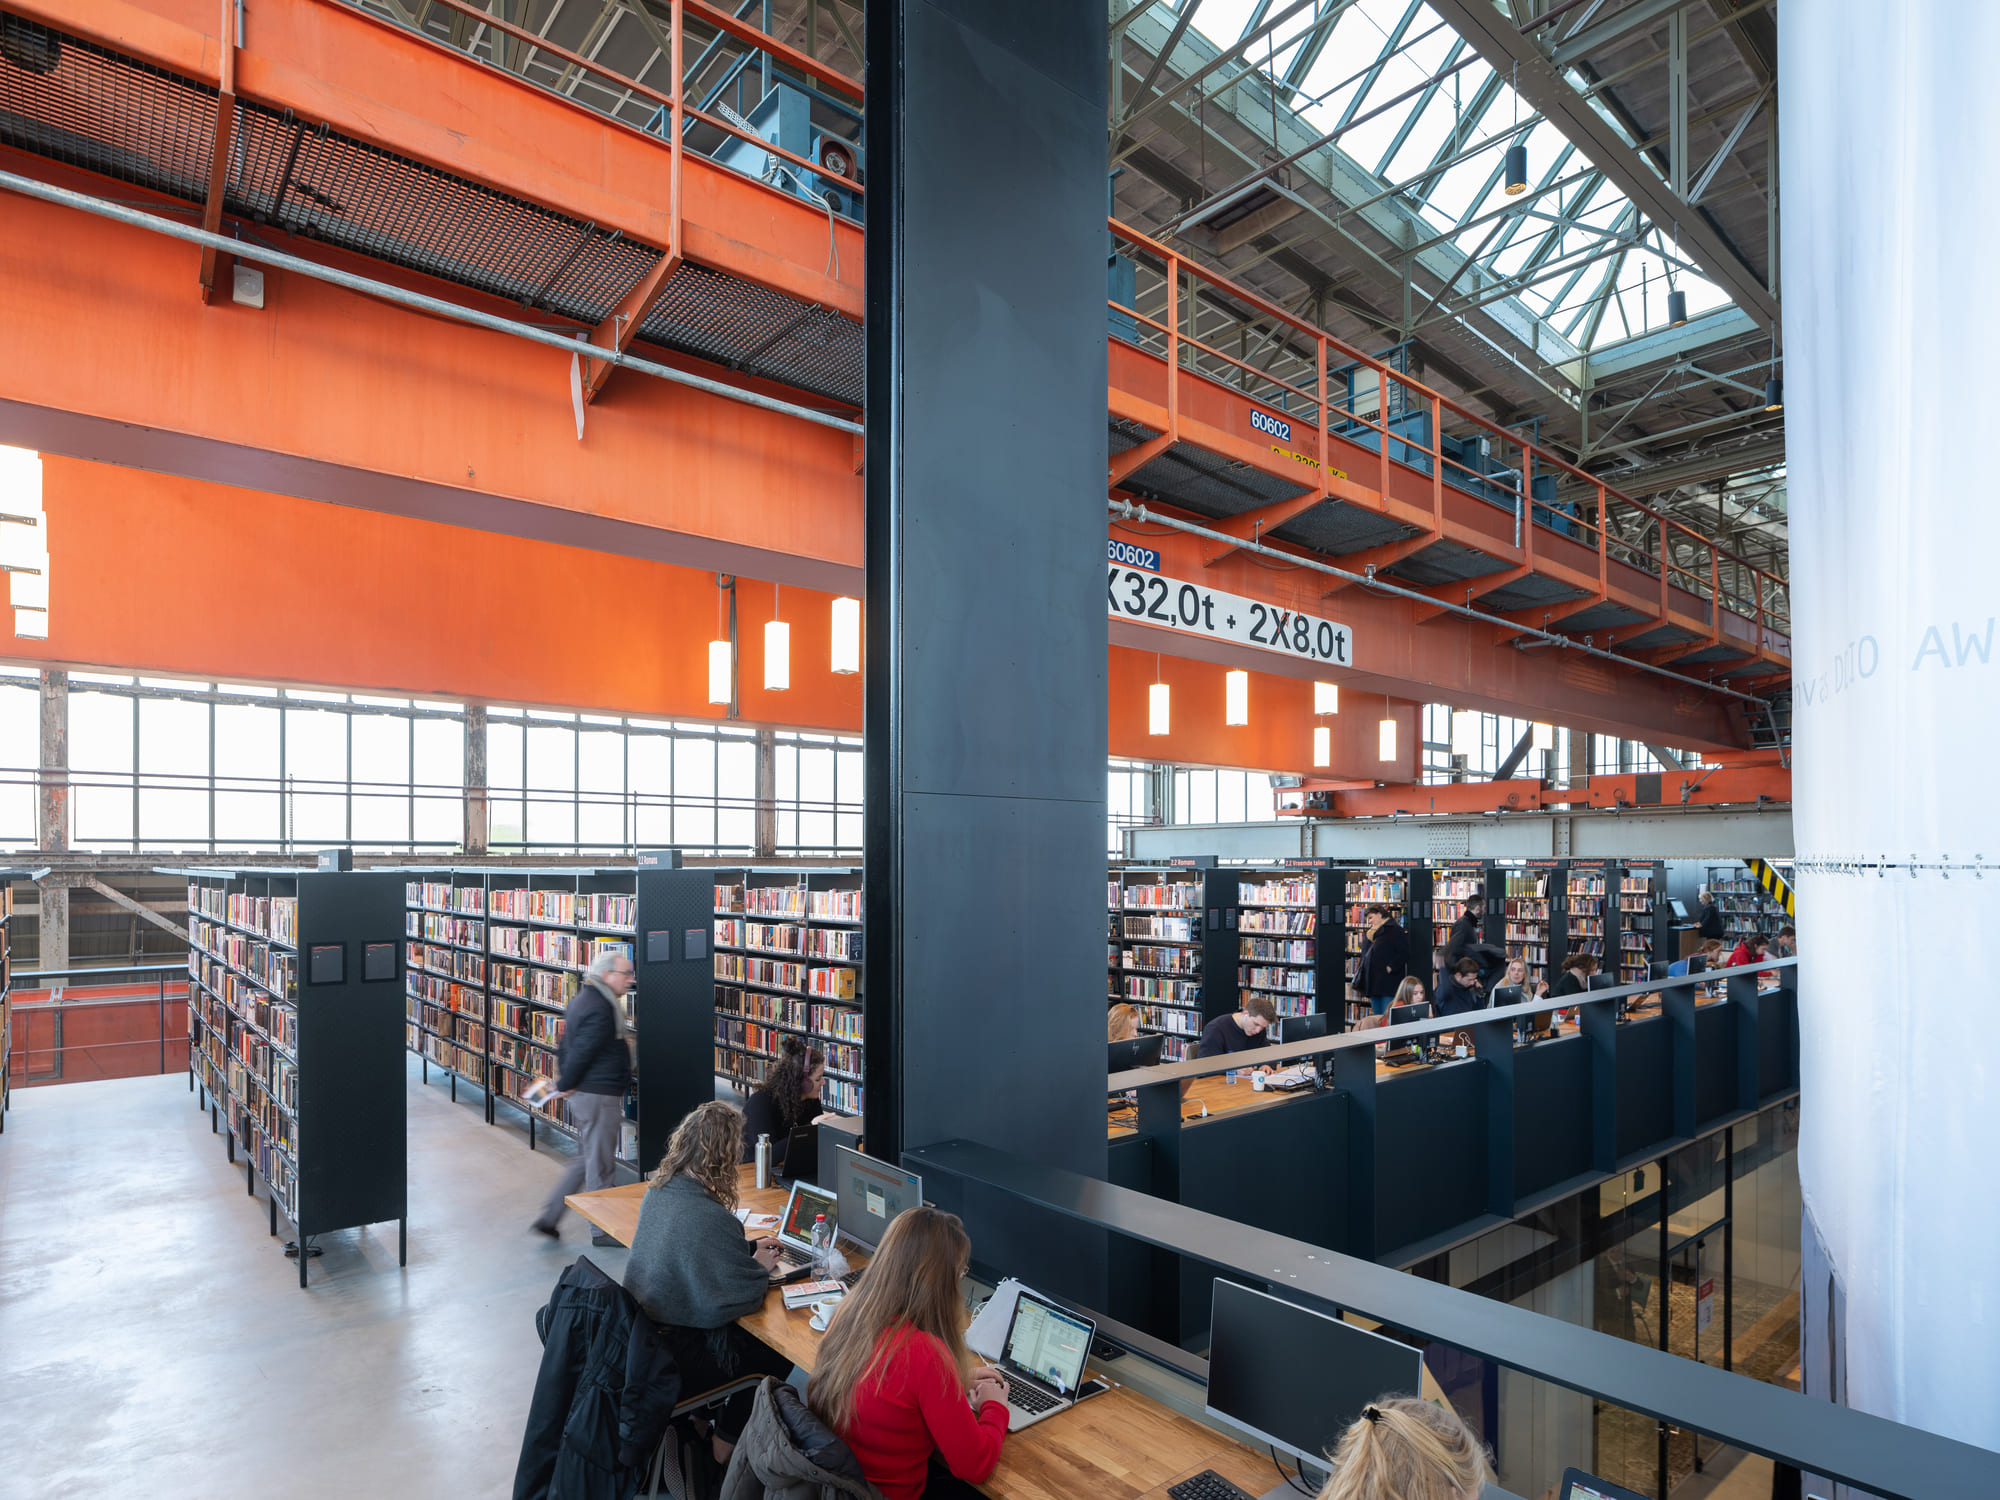 LocHal – Tilburg Public Library